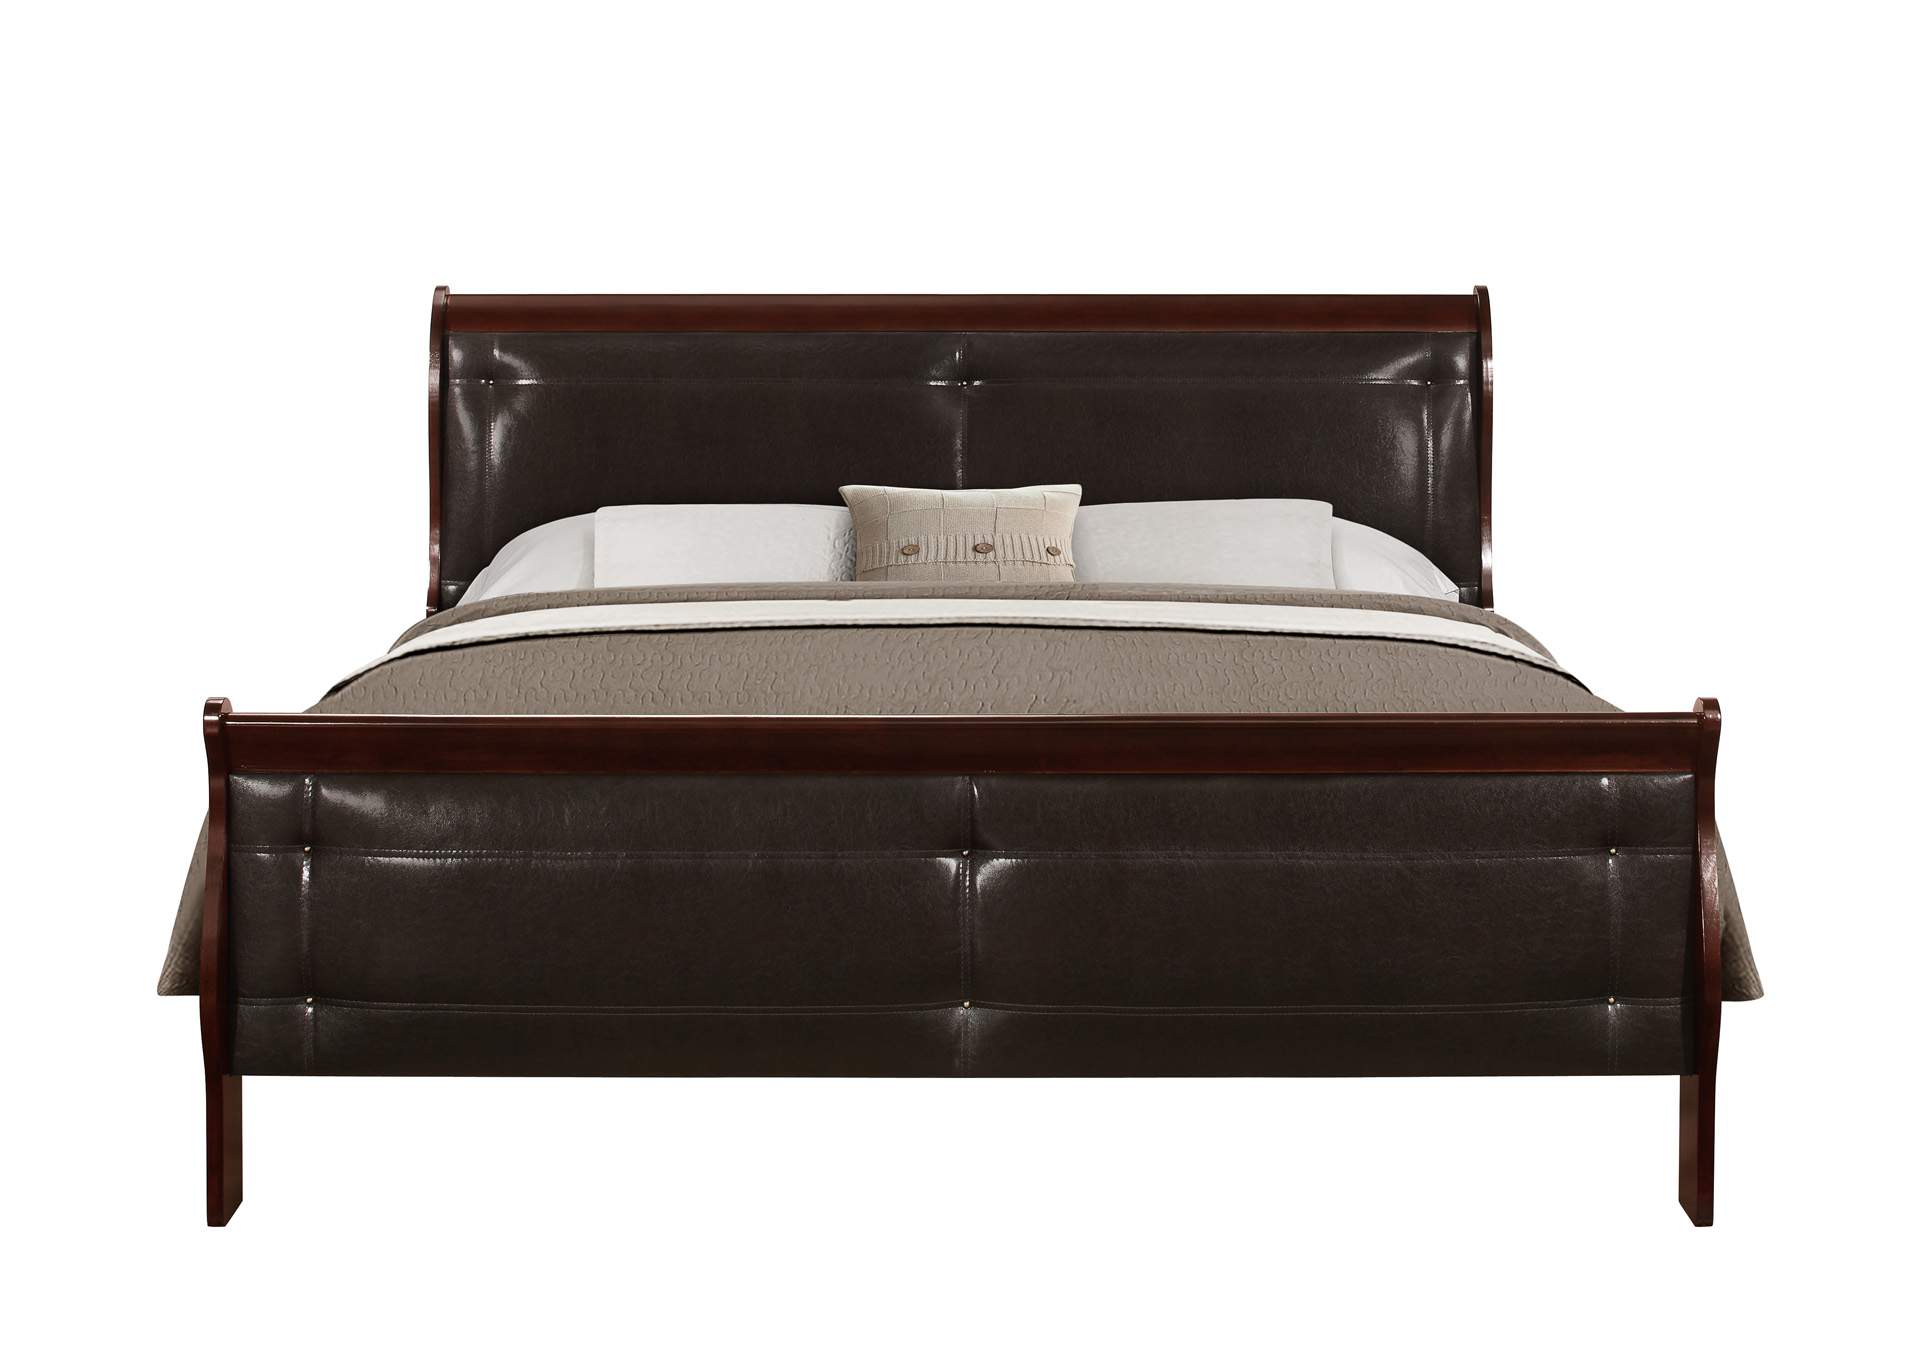 Merlot Marley Queen Bed,Global Furniture USA